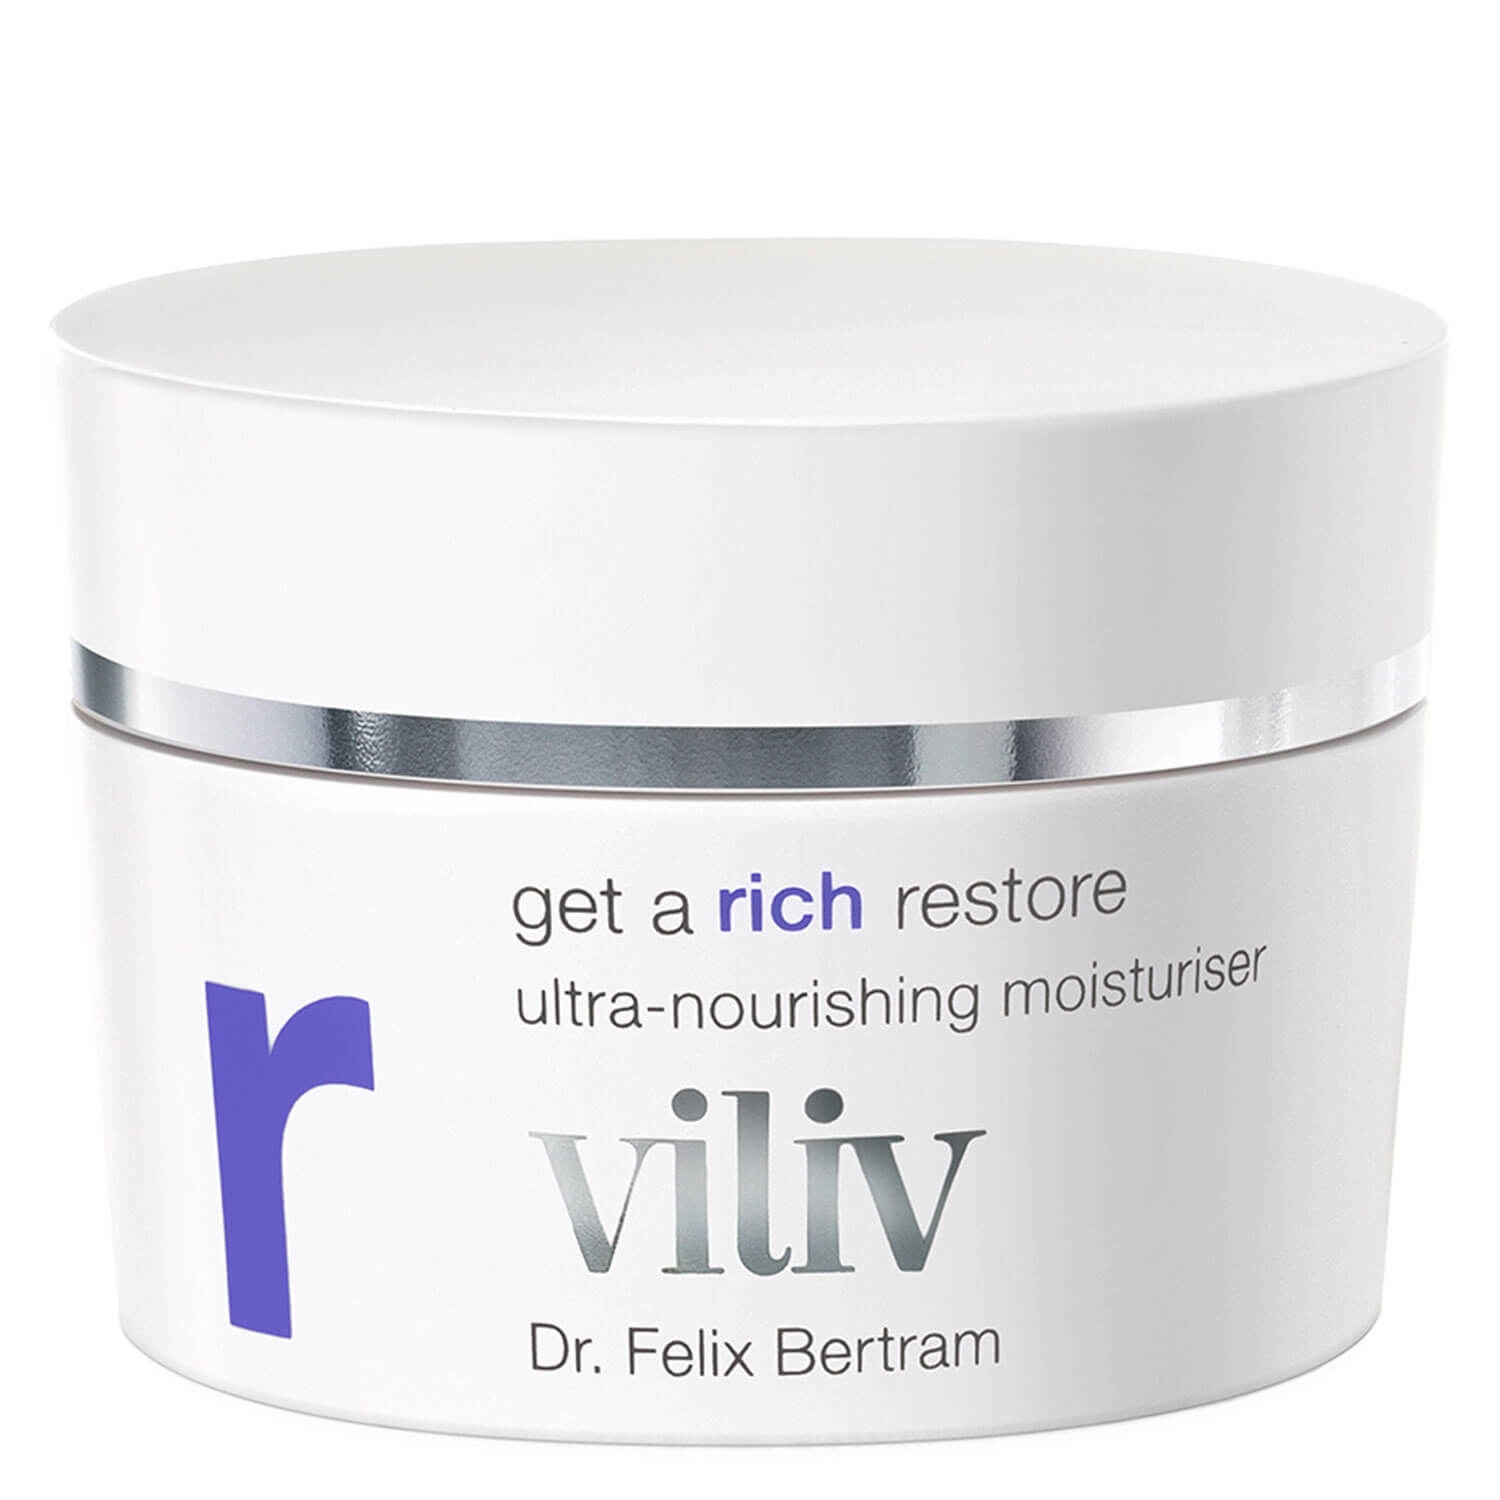 Product image from viliv - get a rich restore ultra-nourishing moisturiser